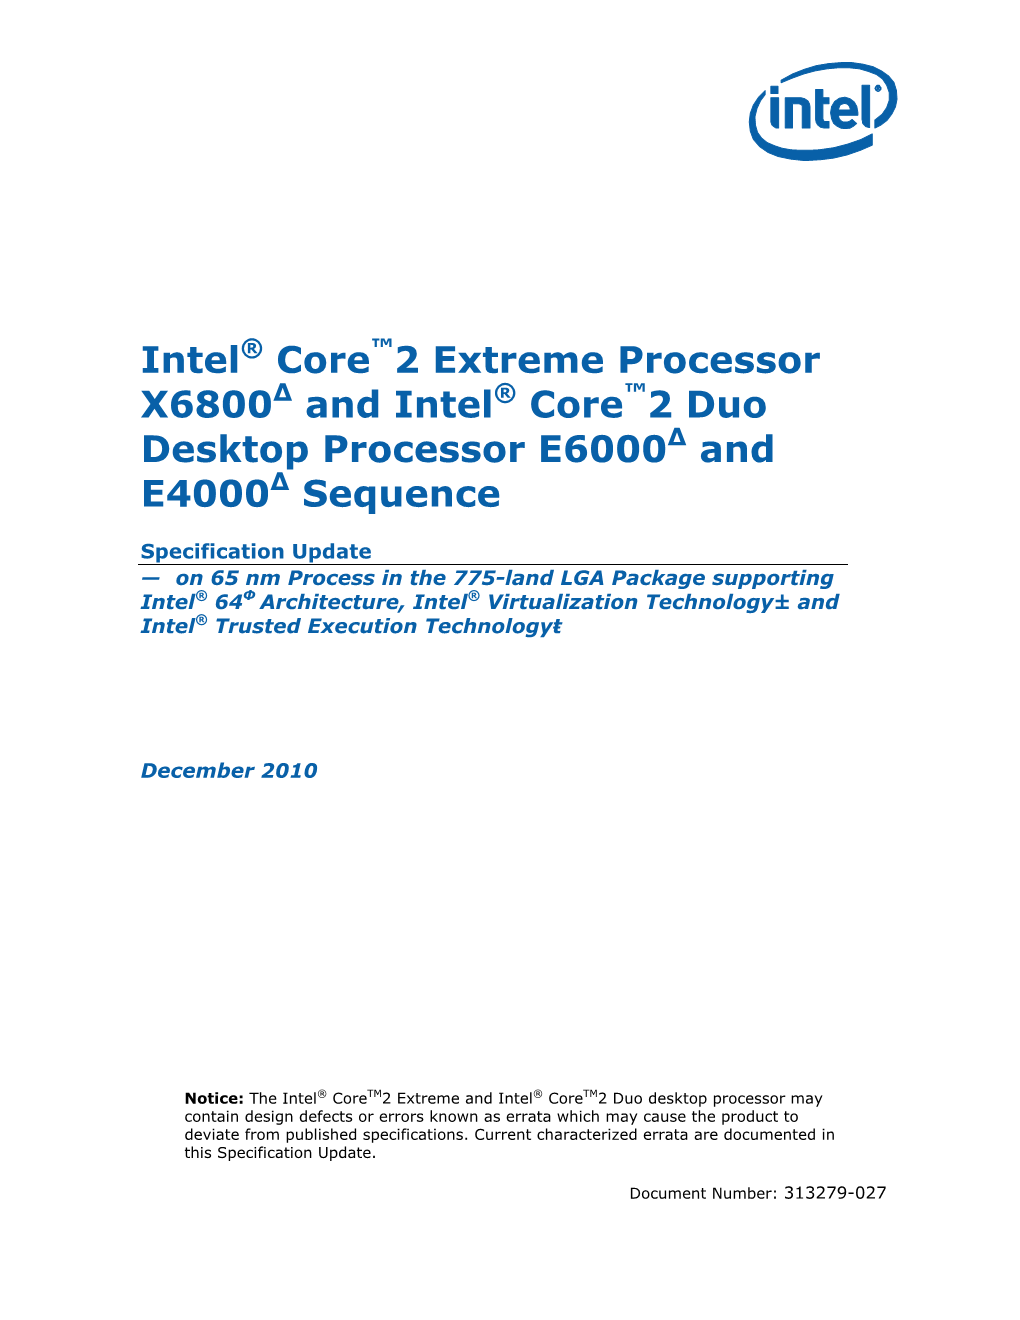 Intel Core 2 Extreme Processor X6800 and Intel Core 2 Duo Desktop